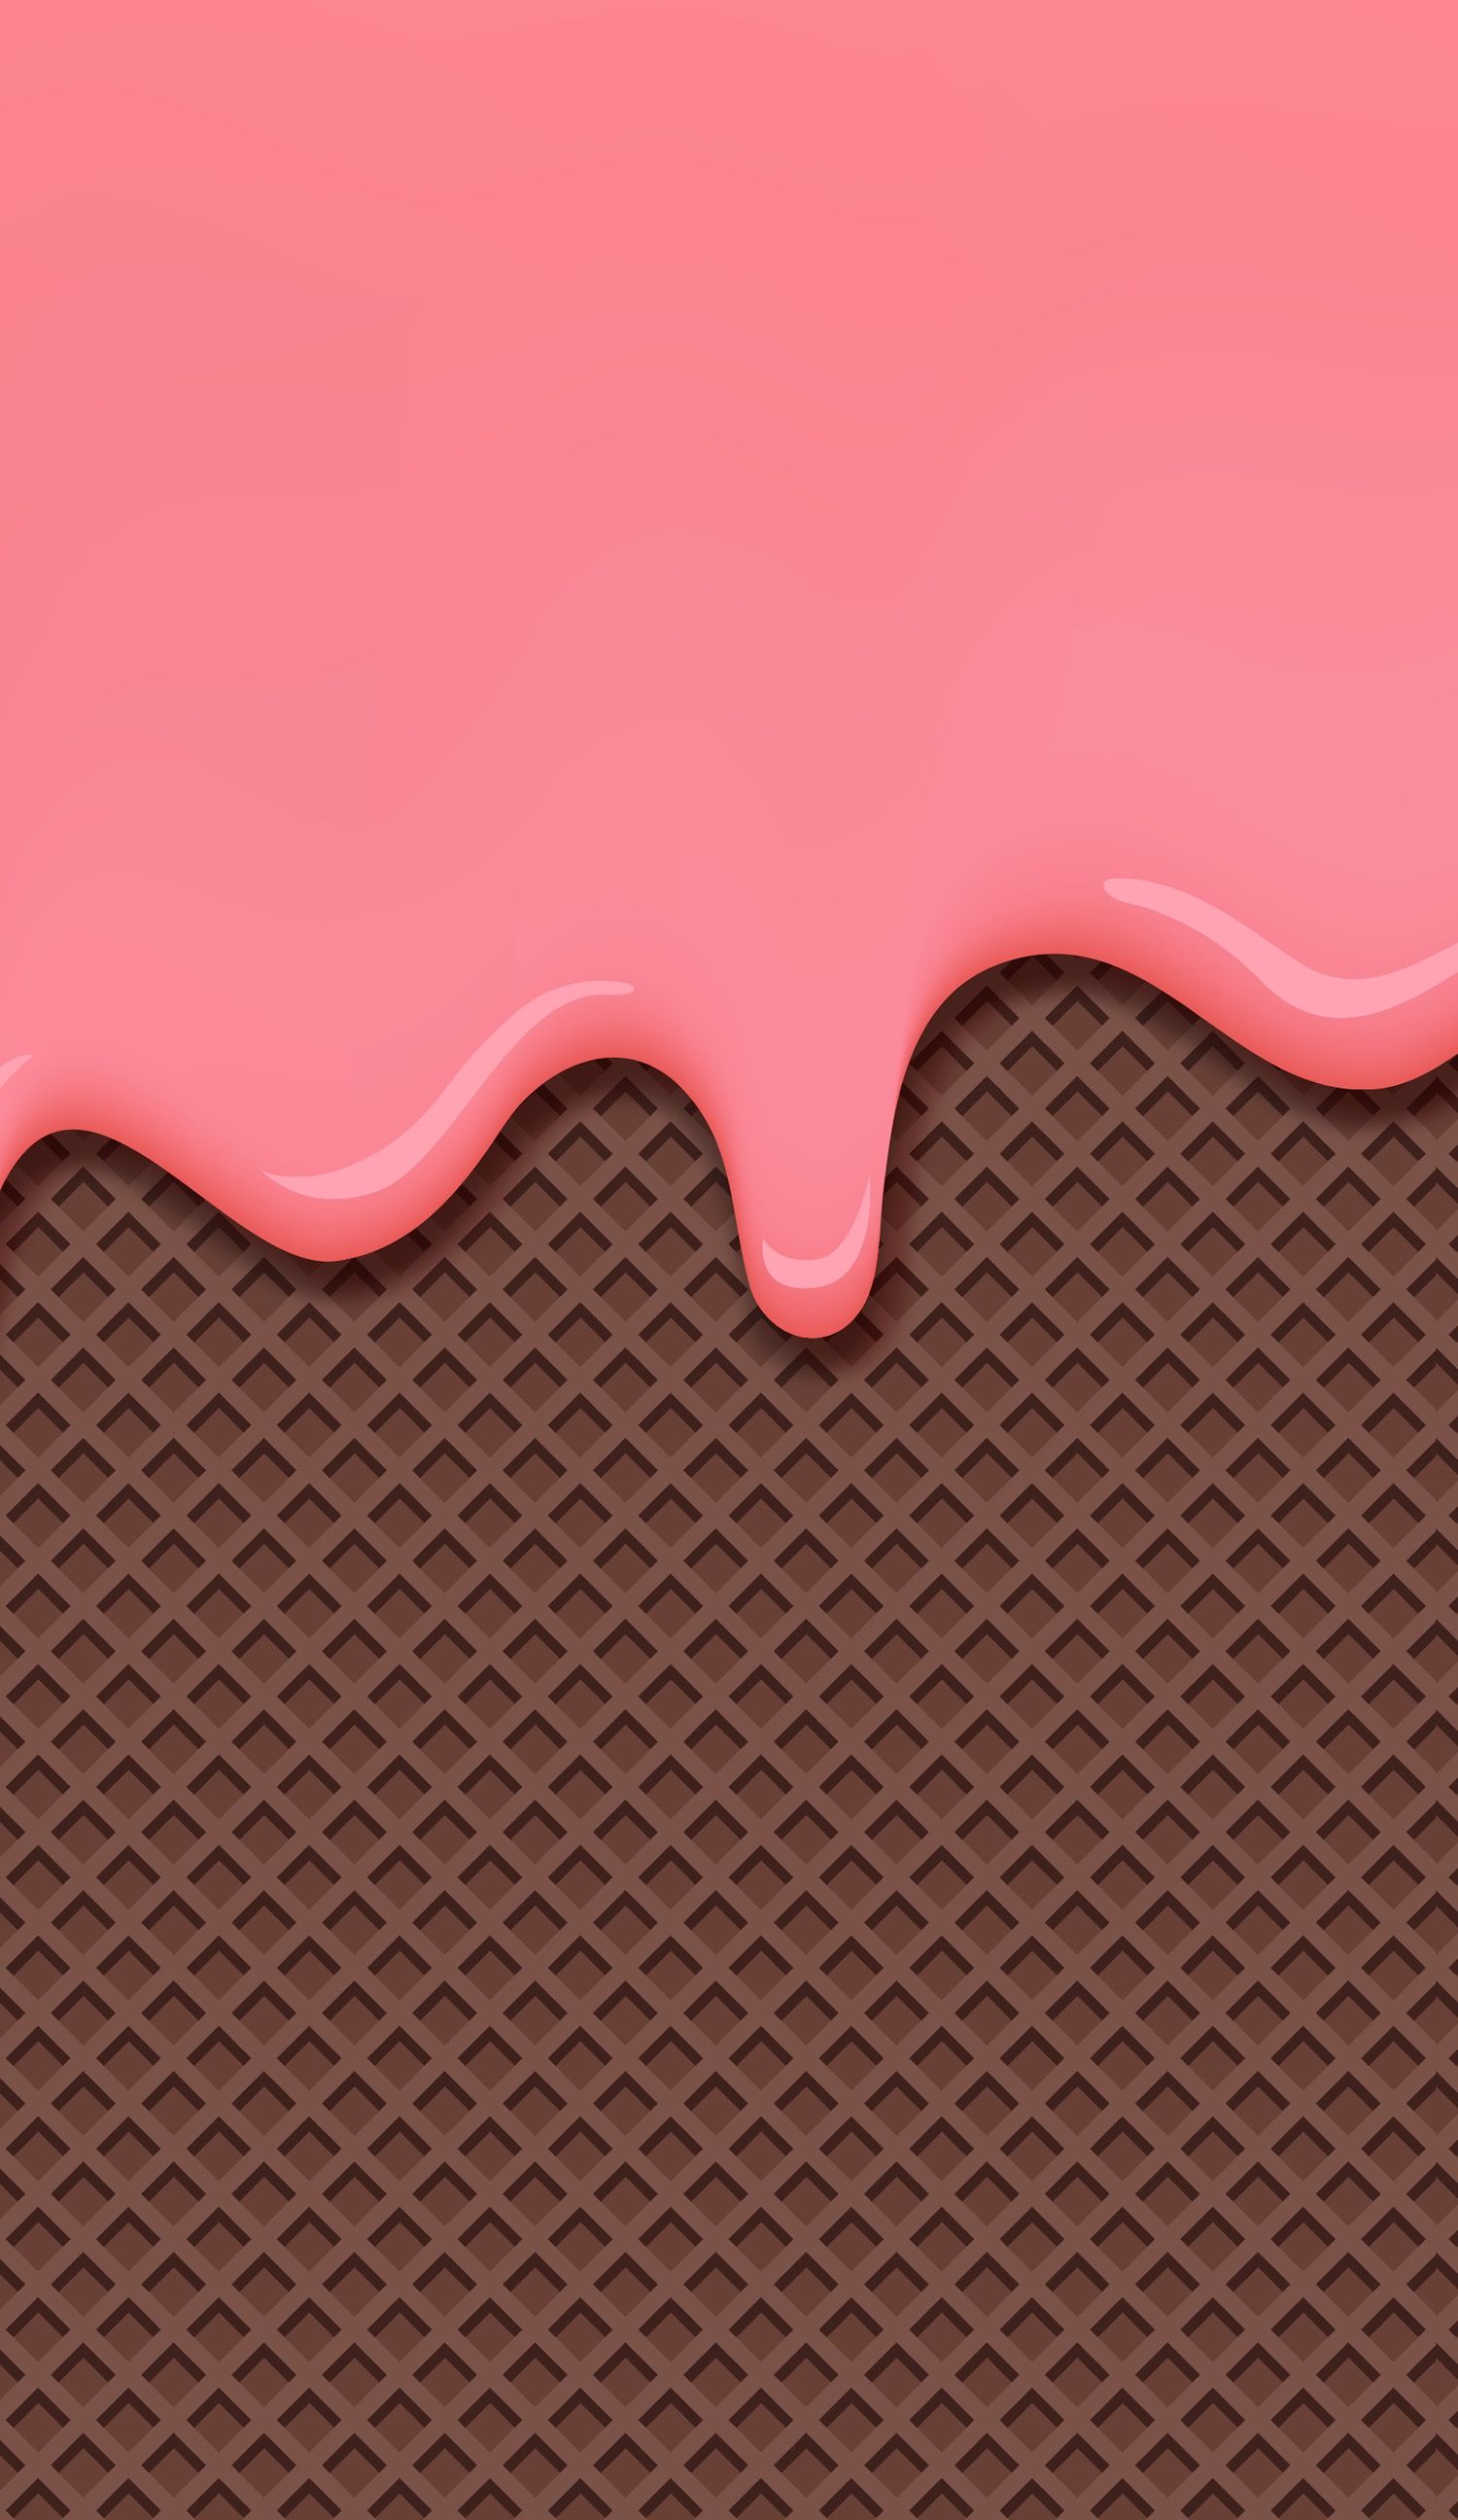 ipad mini wallpaper tumblr,pink,red,tile,magenta,pattern